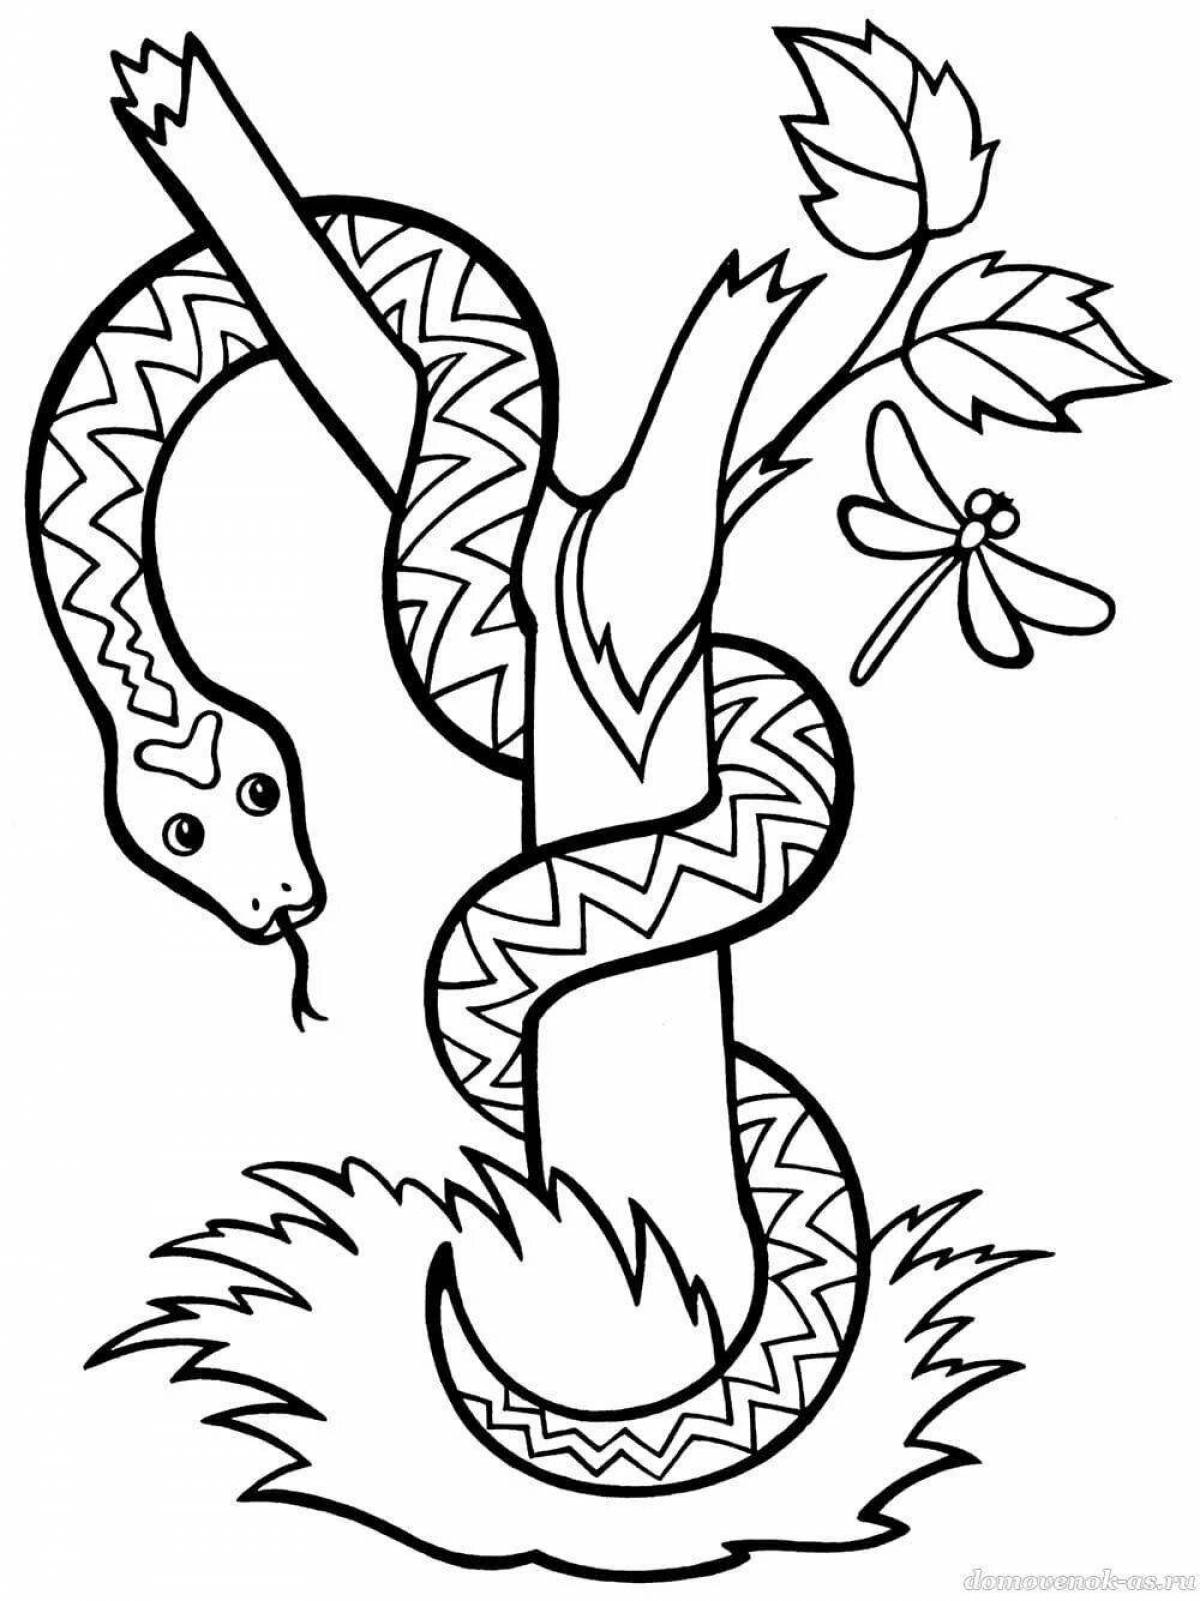 Раскраска элегантная баджовская синяя змея